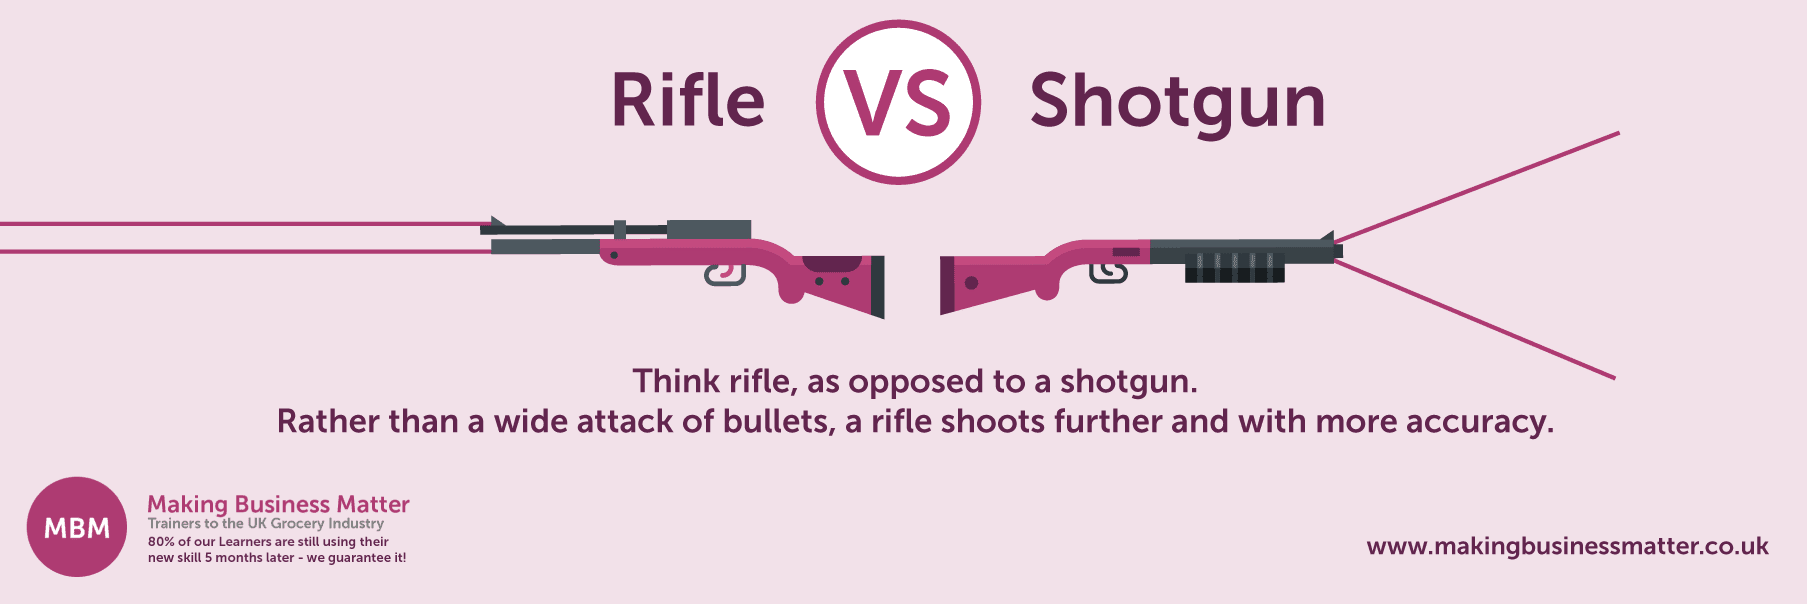 rifle vs. shotgun infographic for shooting further with accuracy